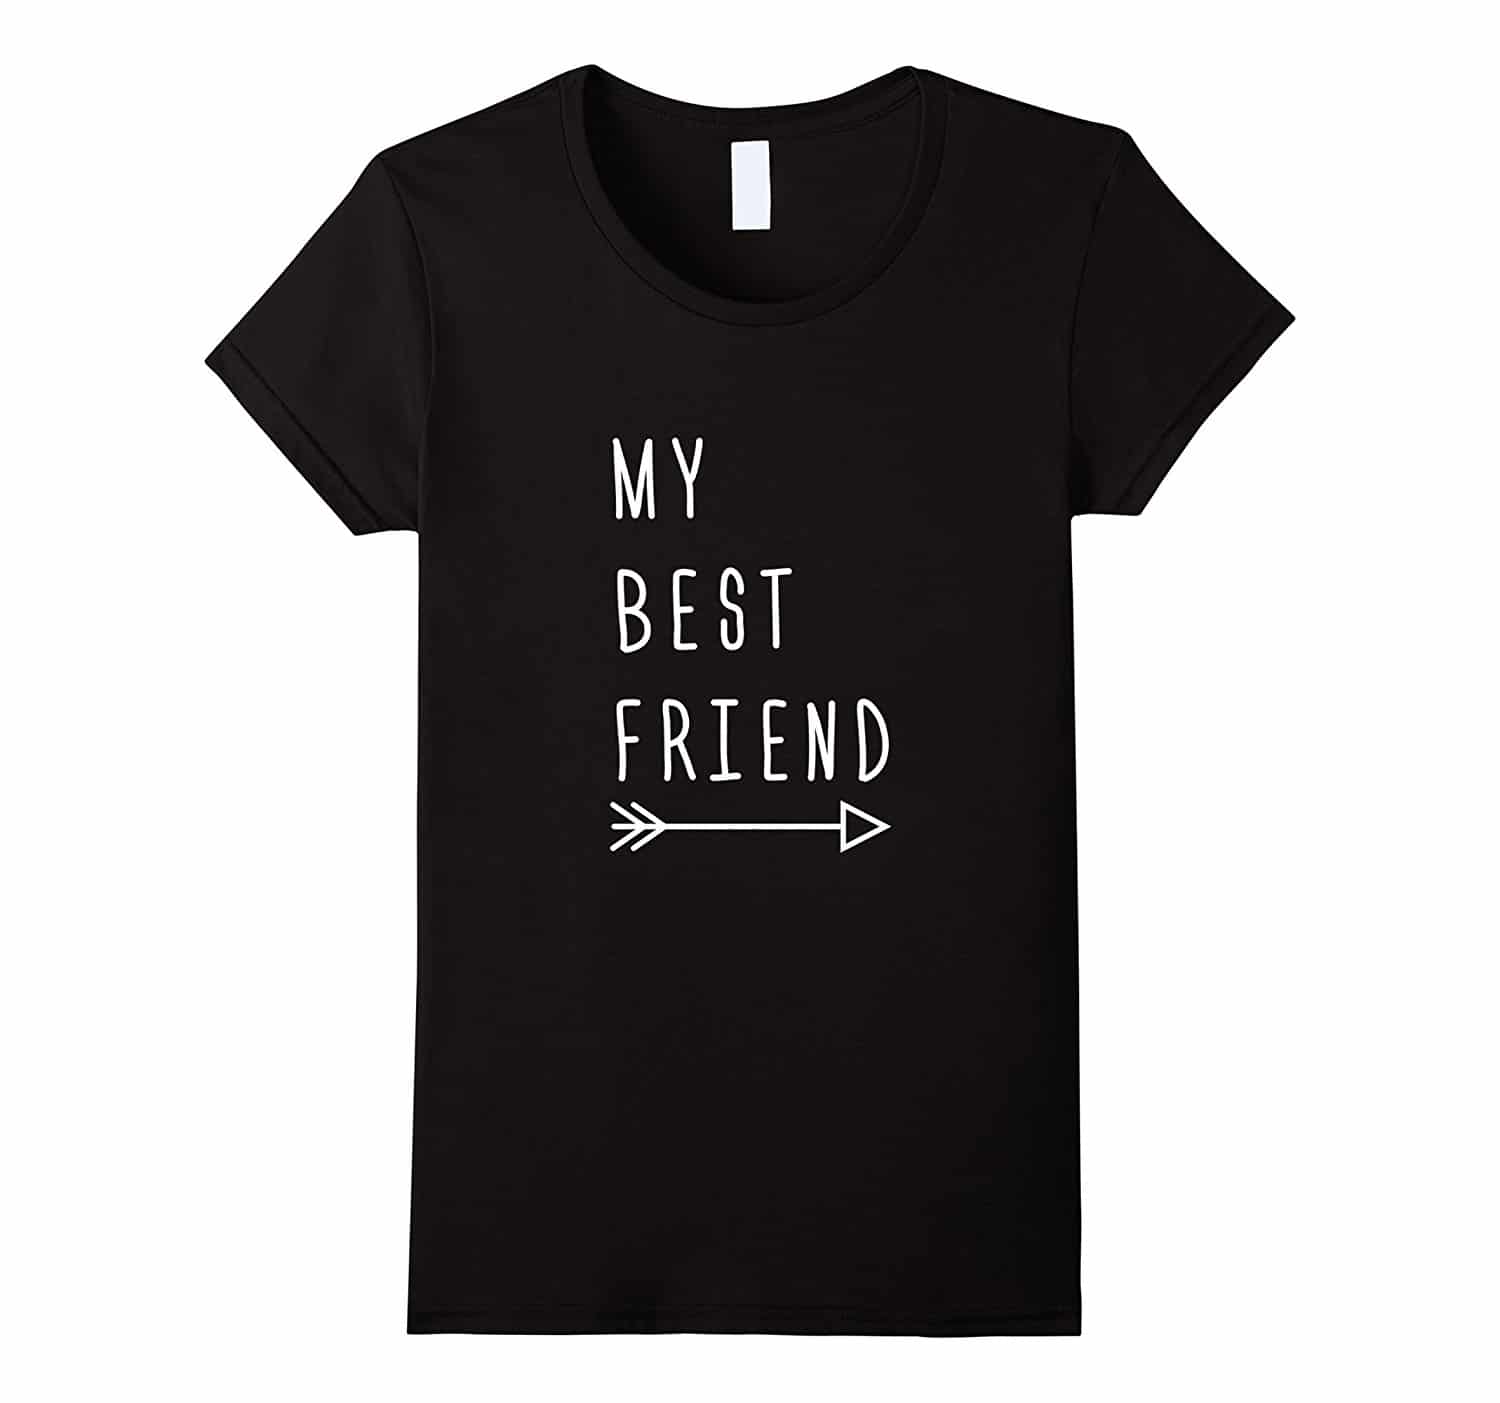 Funny Best Friend Shirts 2018: My Best Friend Pointing Arrow T-Shirt